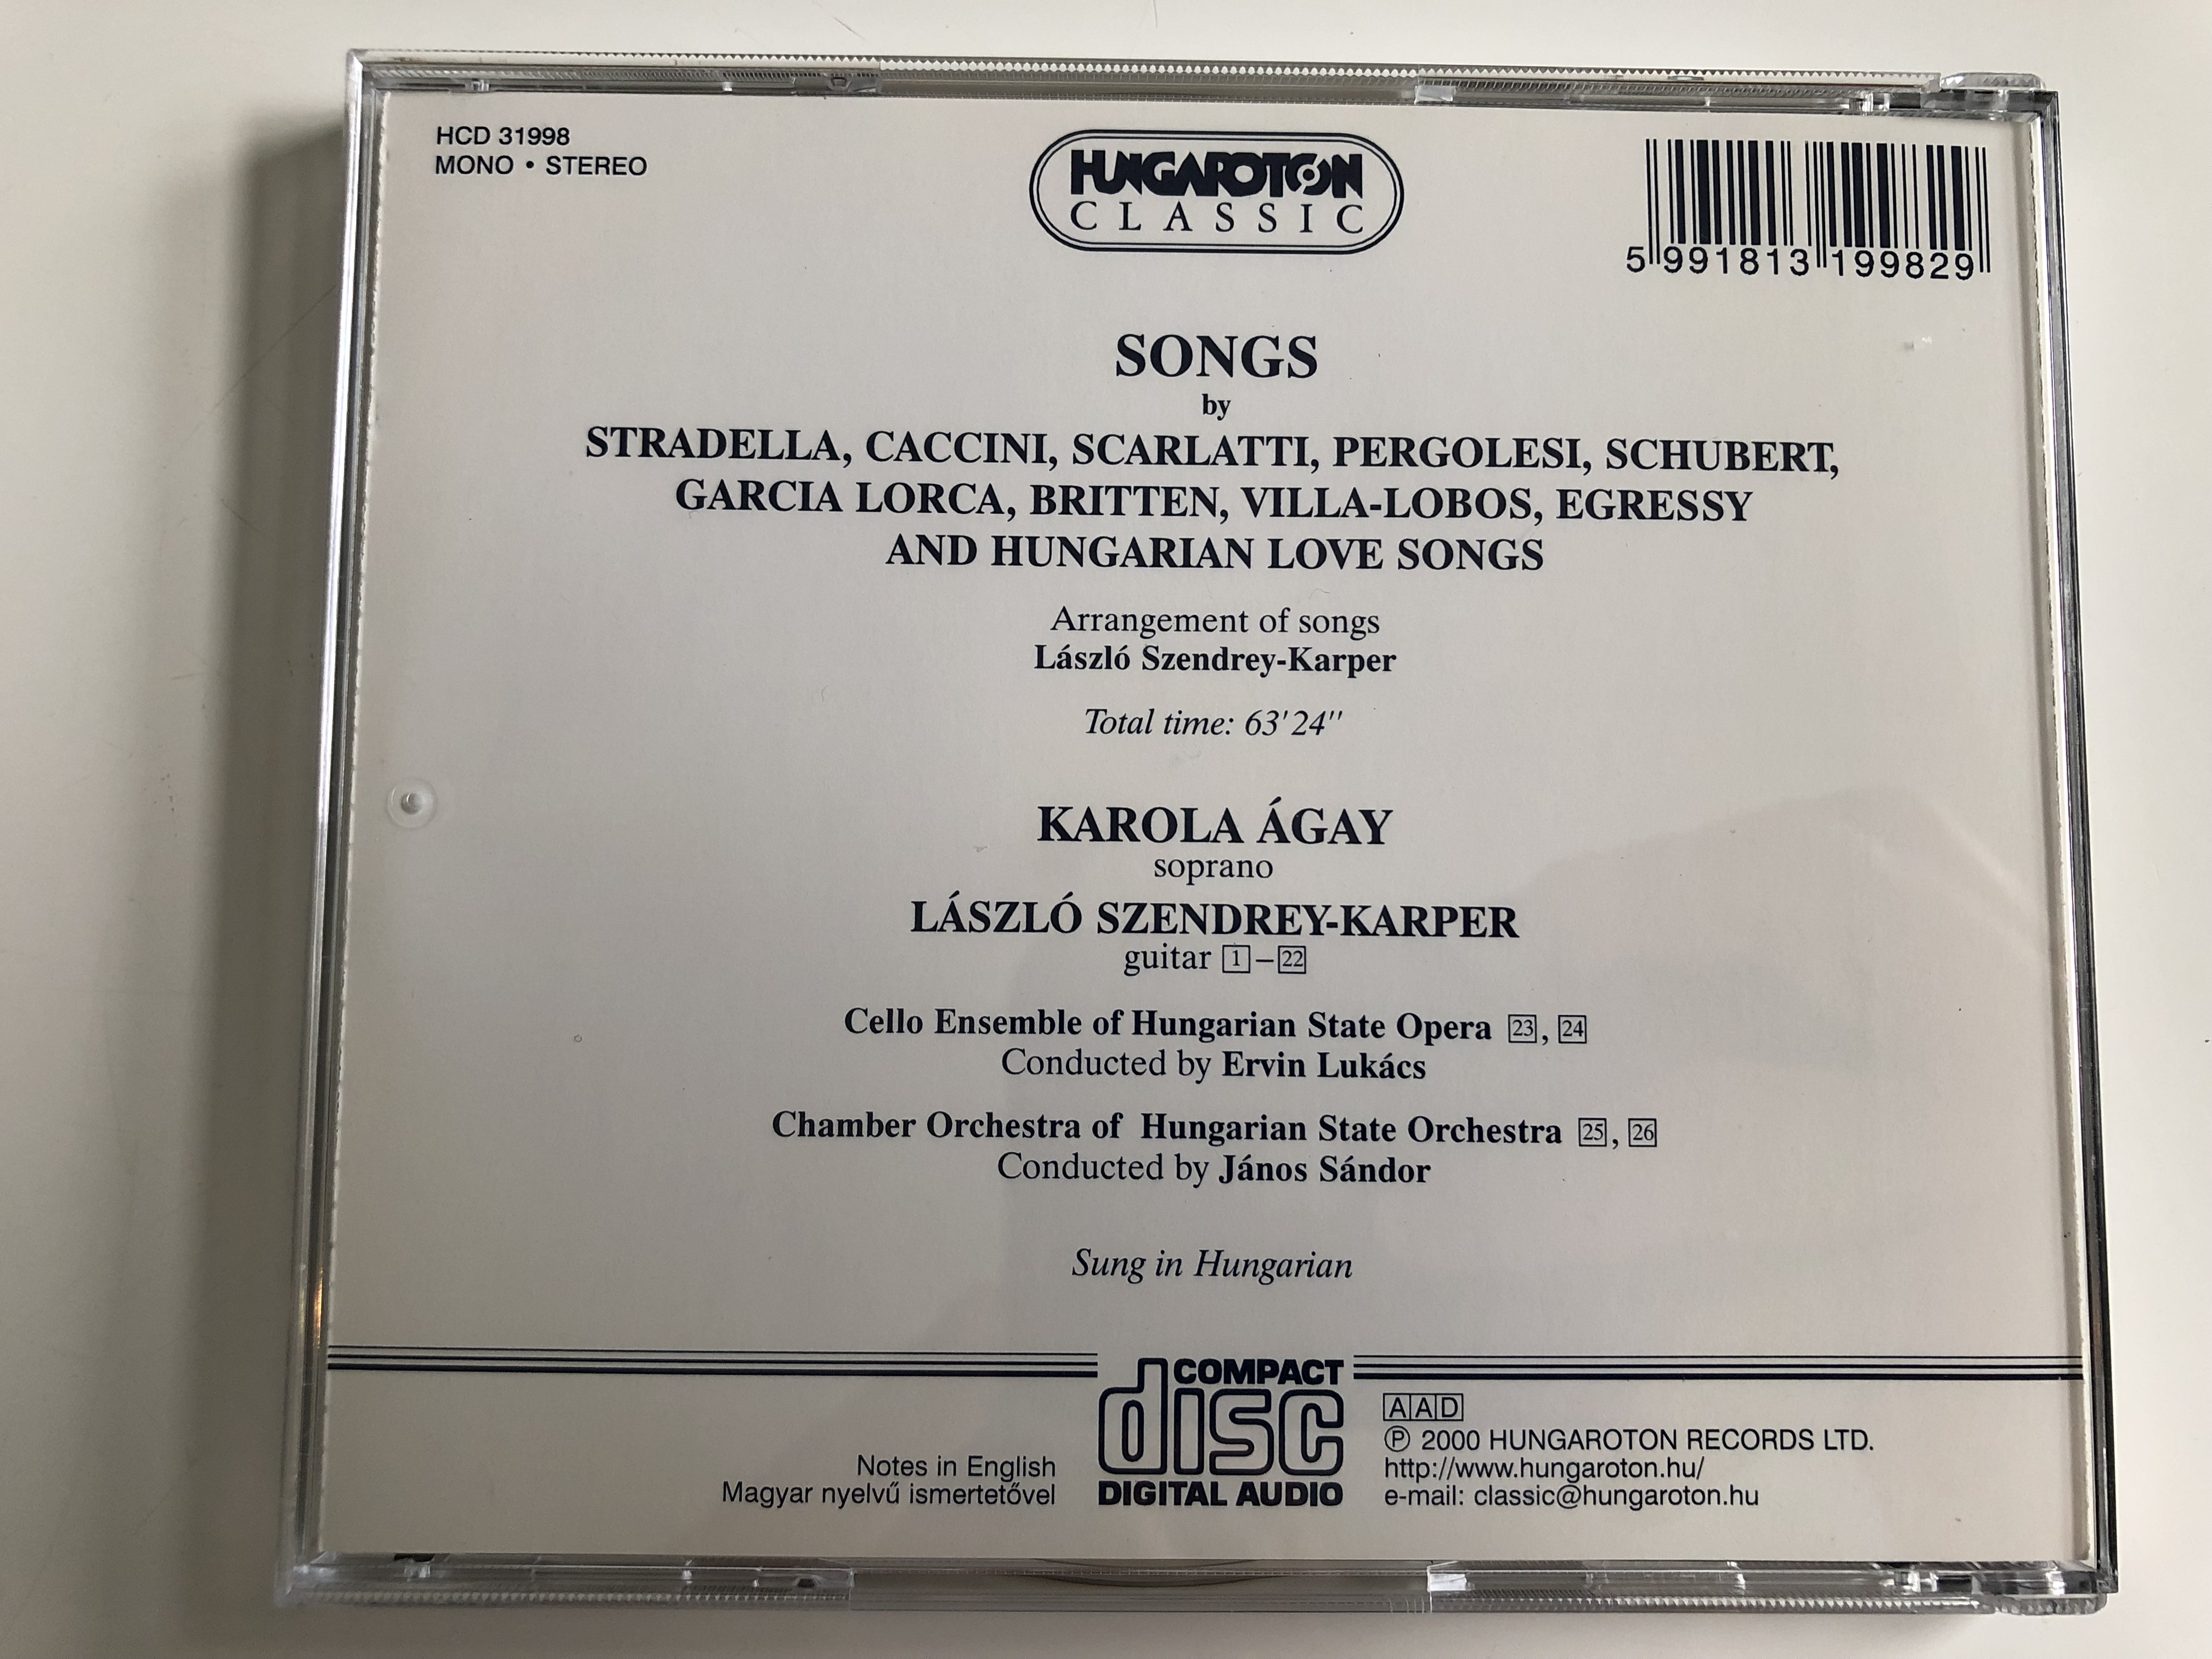 karola-agay-laszlo-szendrey-karper-songs-by-caccini-stradella-scarlatti-pergolesi-schubert-garcia-lorca-britten-villa-lobos-hungarian-love-songs-hungaroton-audio-cd-2000-mono-hcd-3-7-.jpg